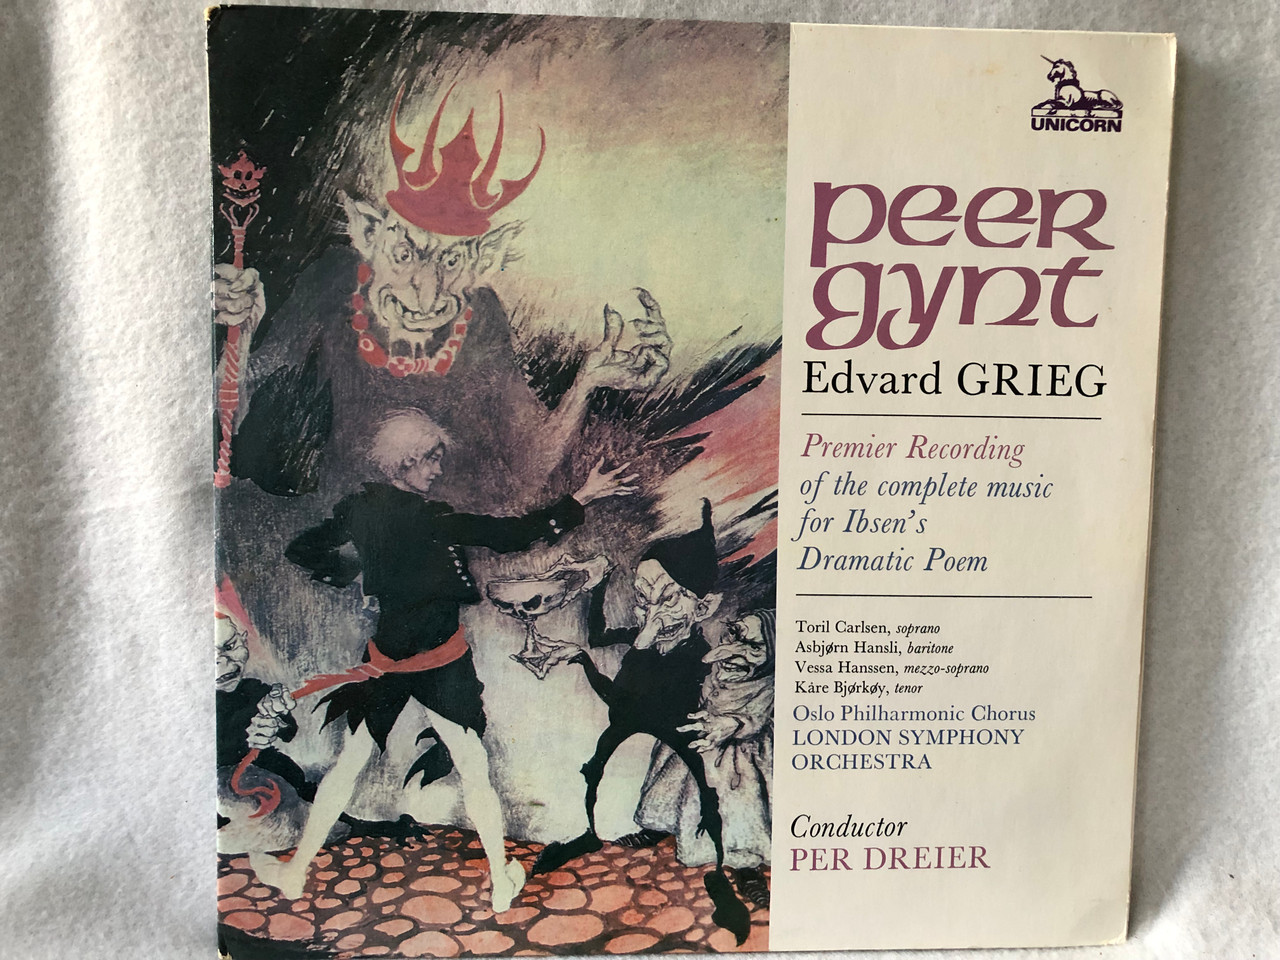 Edward Grieg Peer Gynt / Unicorn / LP VINYL RHS 361/2 - bibleinmylanguage